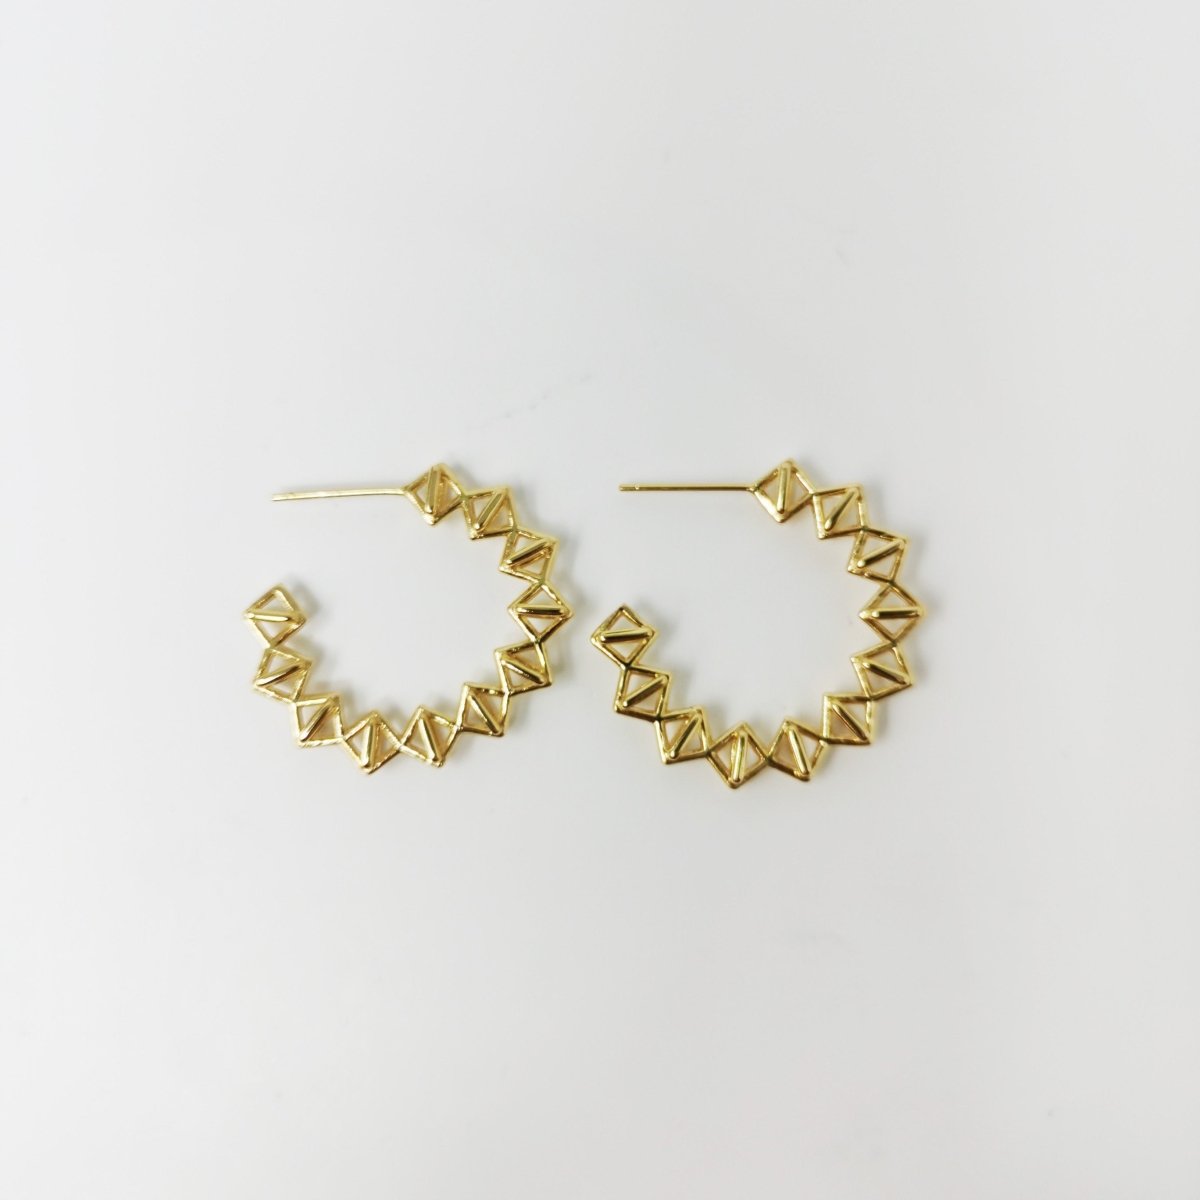 24k Vermeil Gold Earrings, Hoop Earrings, Medium Hoop, Geometric Earring, Gift for Her, Earrings for Women, Everyday Wear Earrings K-745 - DLUXCA